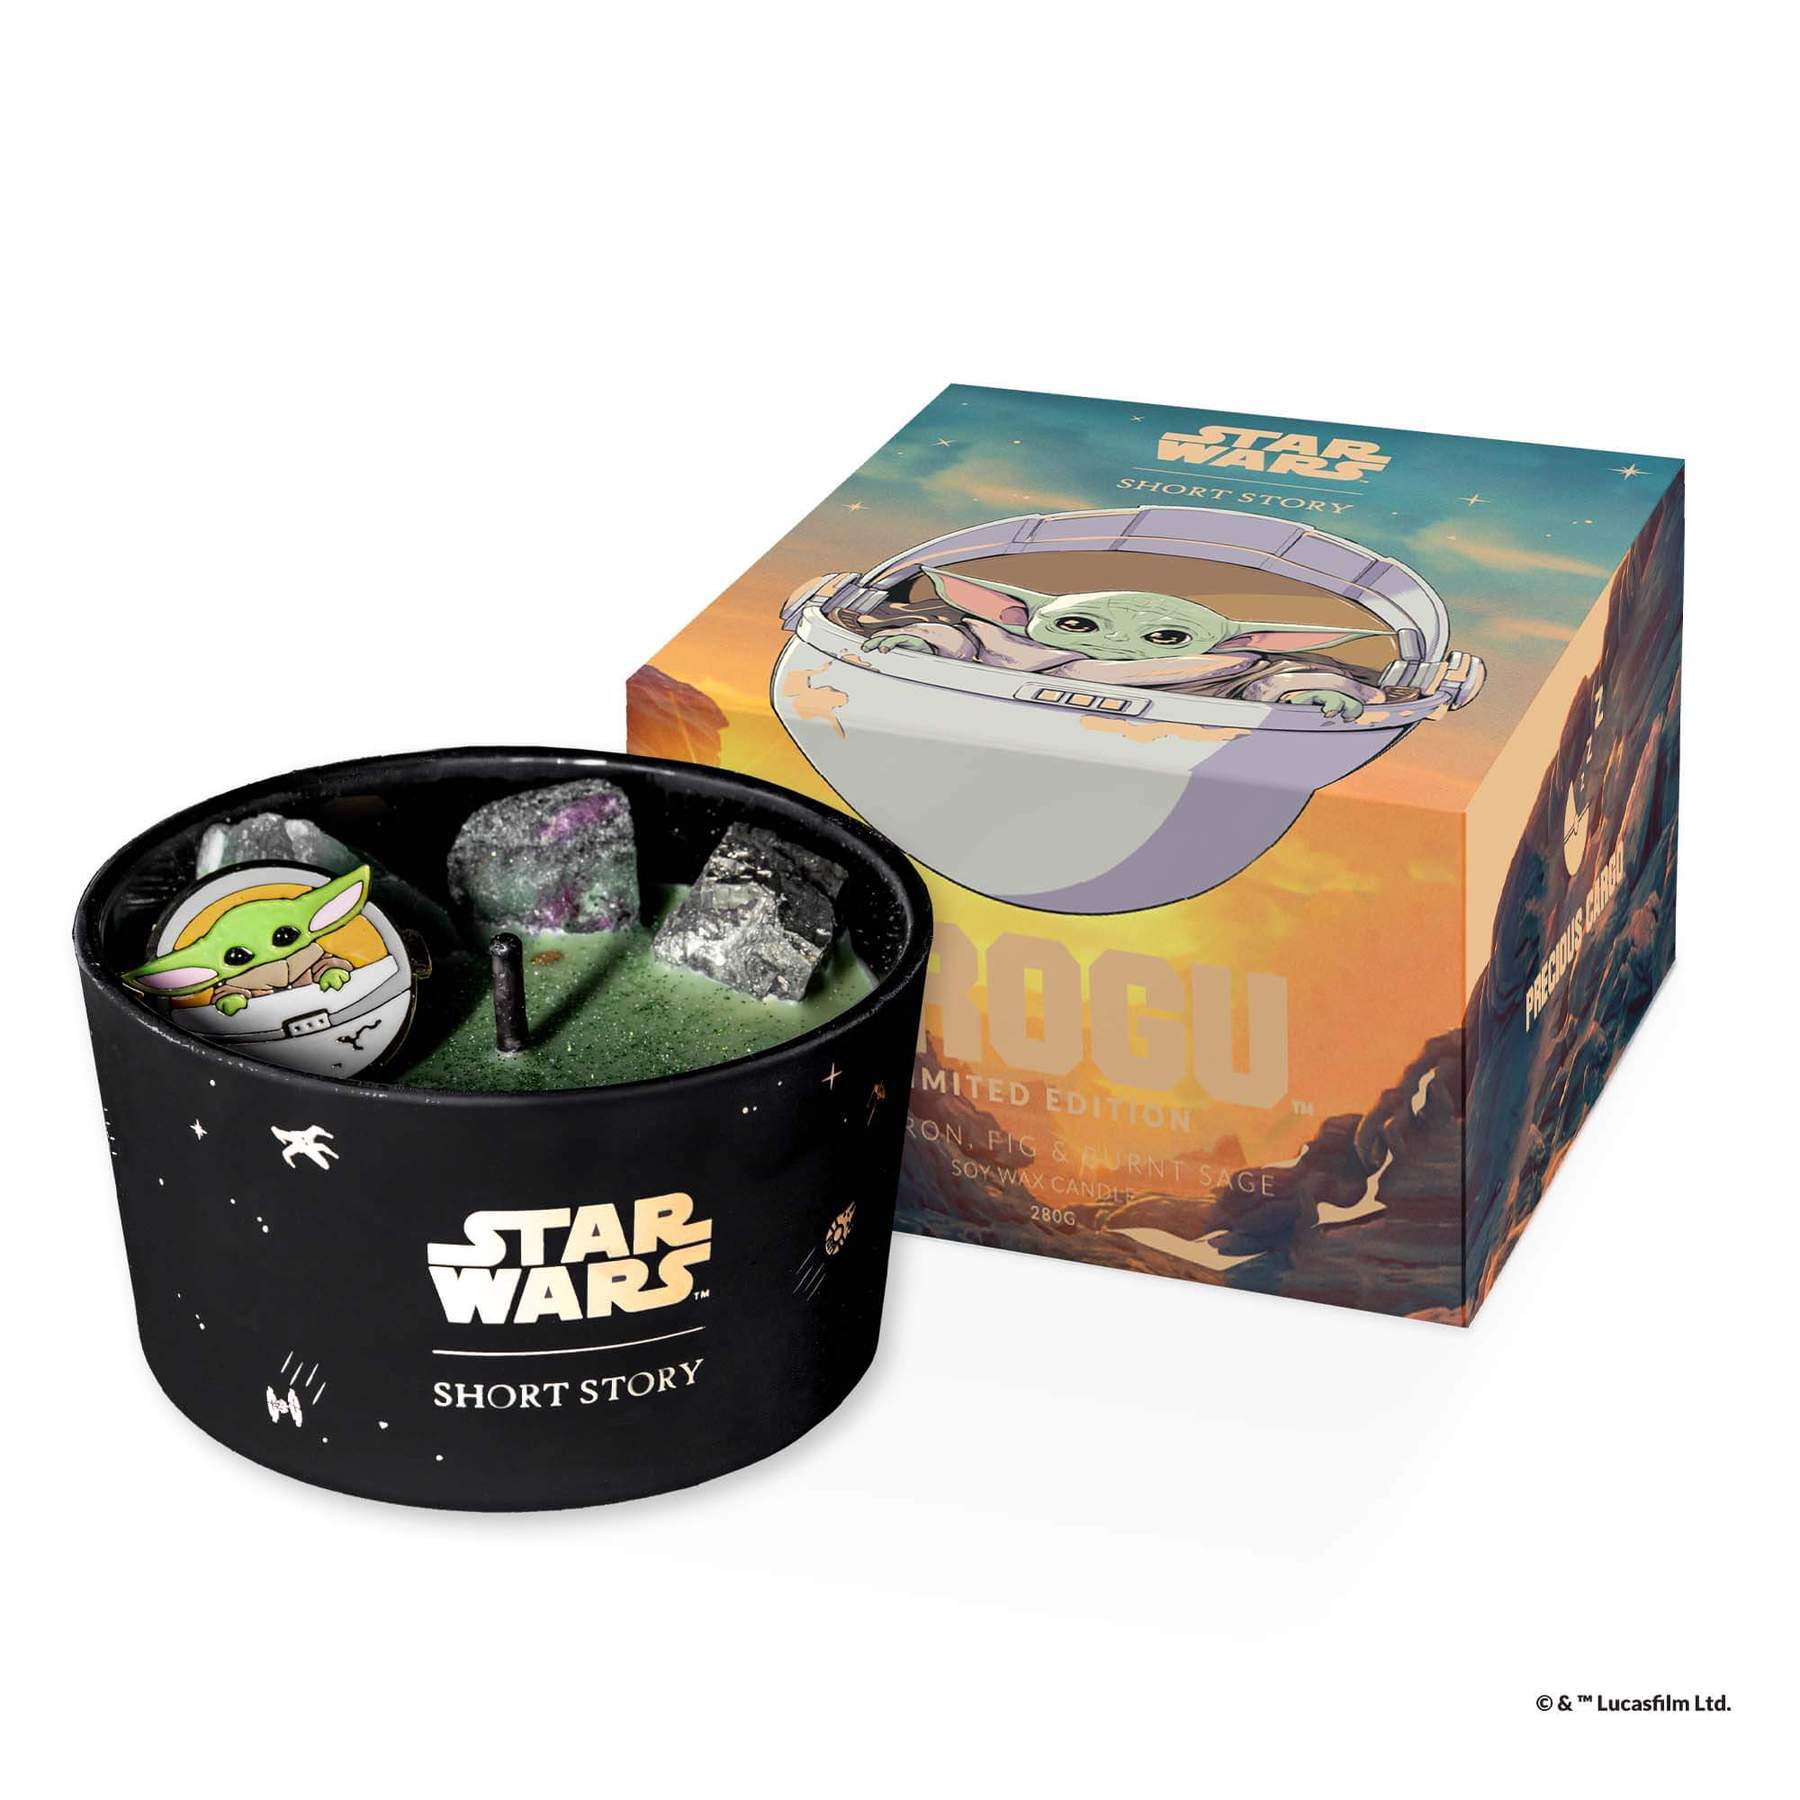 Star Wars ™ Candle Grogu ™ Limited Edition - MACARON, FIG & BURNT SAGE